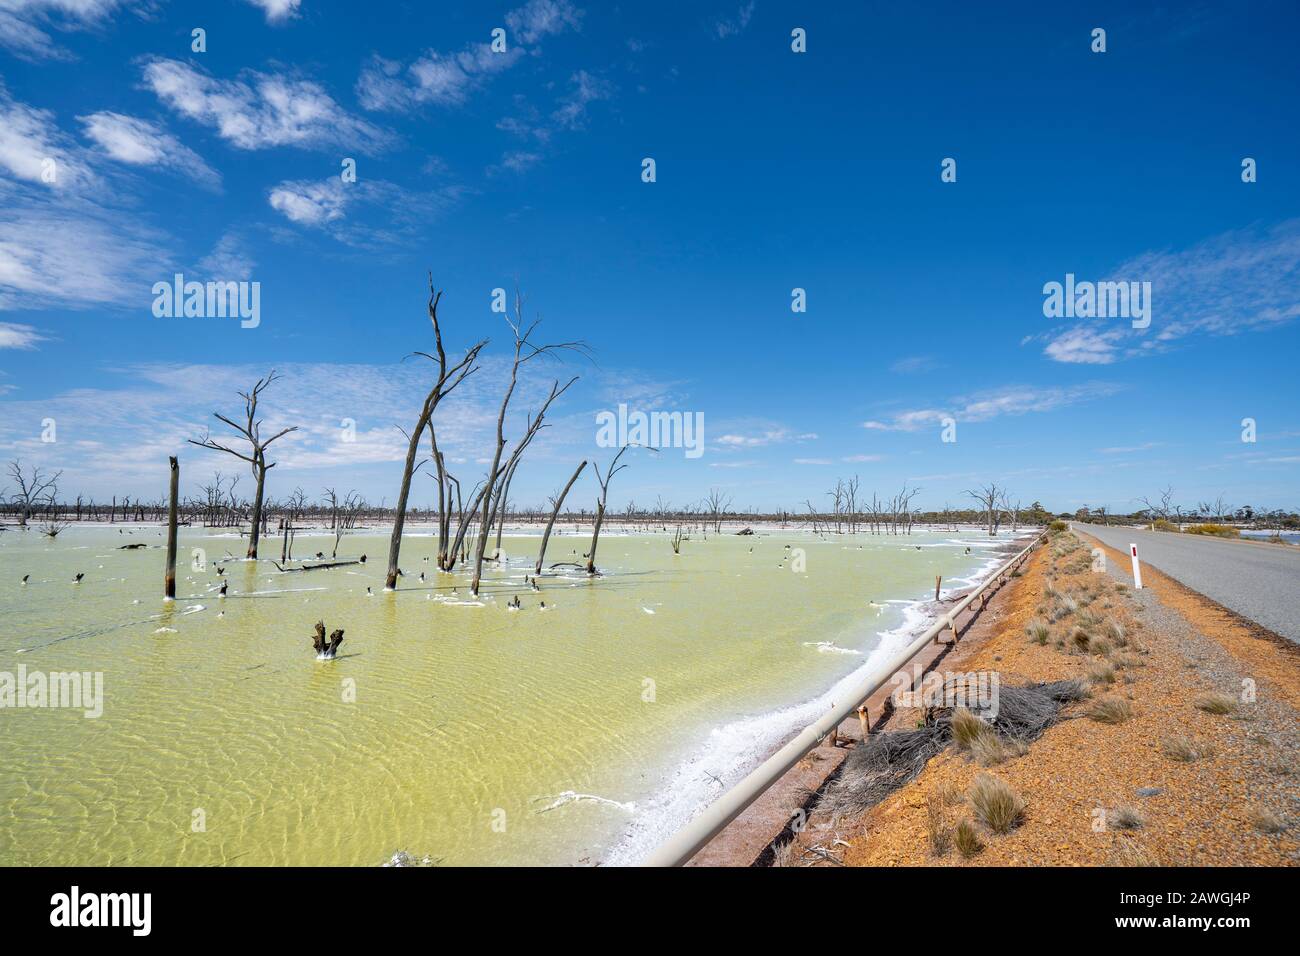 Troncos de árboles muertos en Job Lake, un lago de sal cerca de Beacon, Australia Occidental Foto de stock